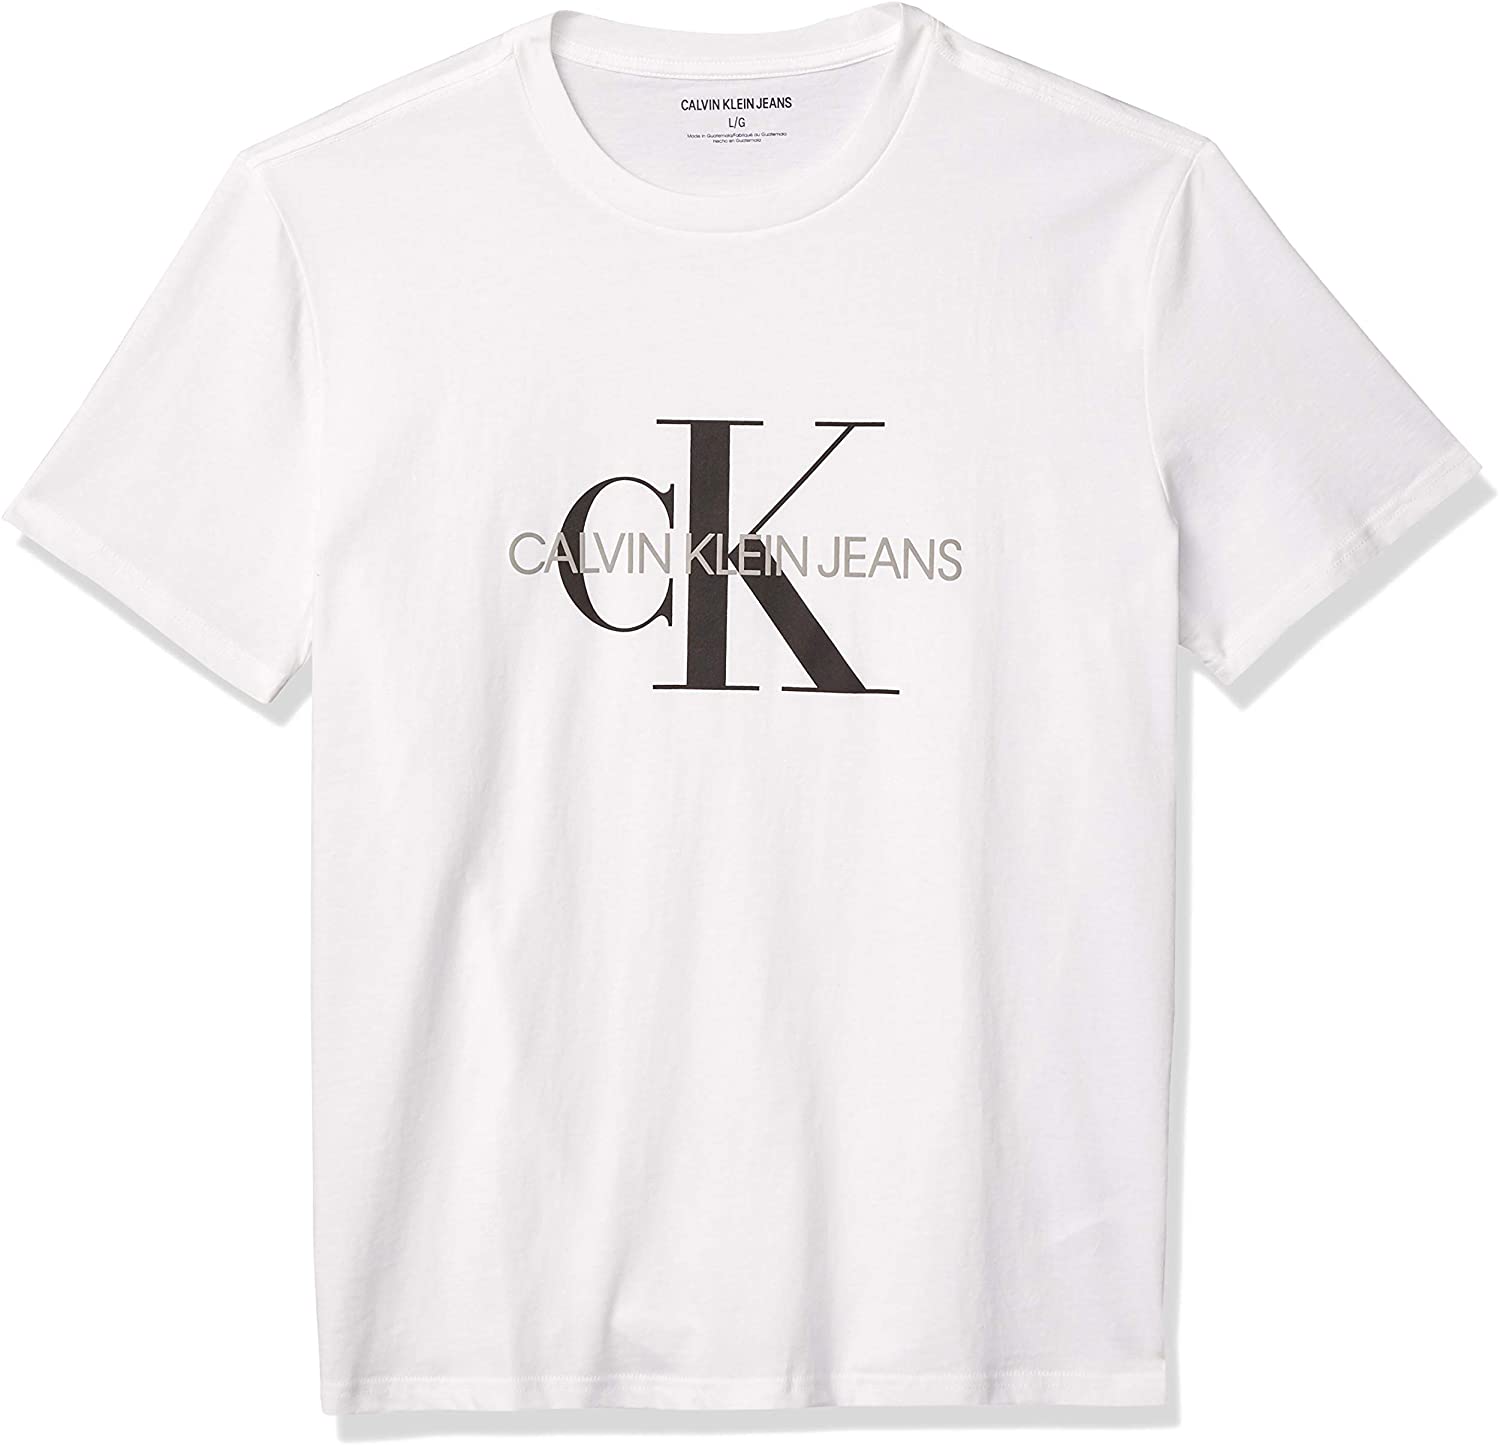 Calvin Klein 经典白T恤$27.92起!100%纯棉